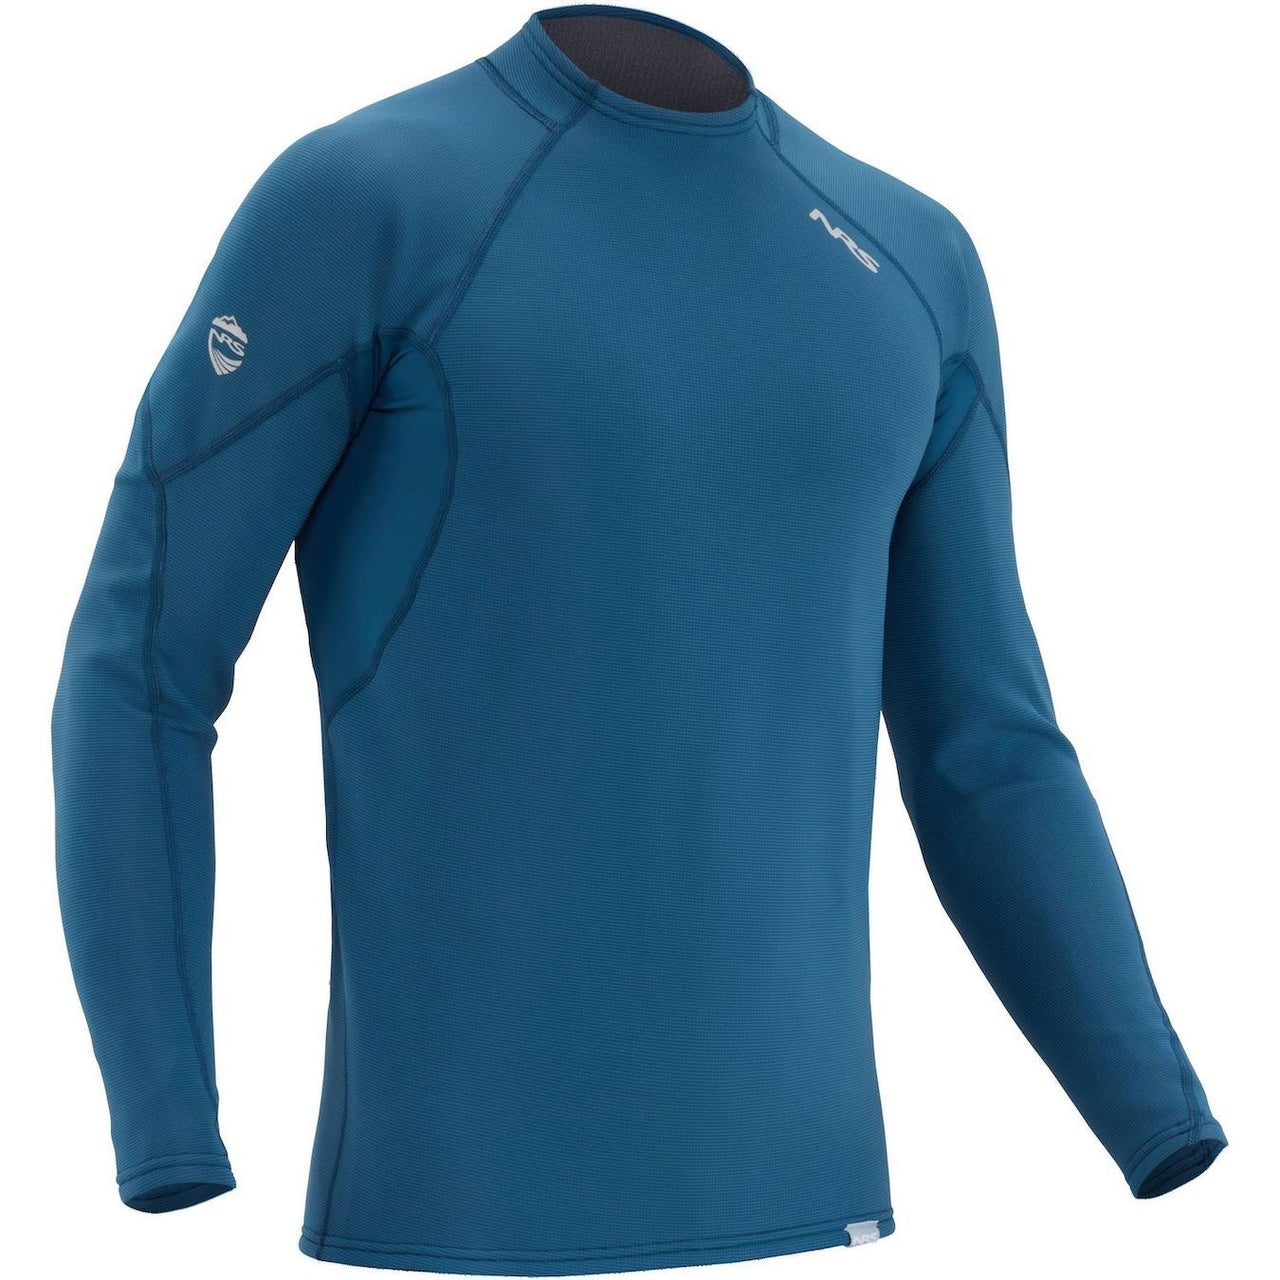 Men's HydroSkin 0.5 Long-Sleeve Shirt